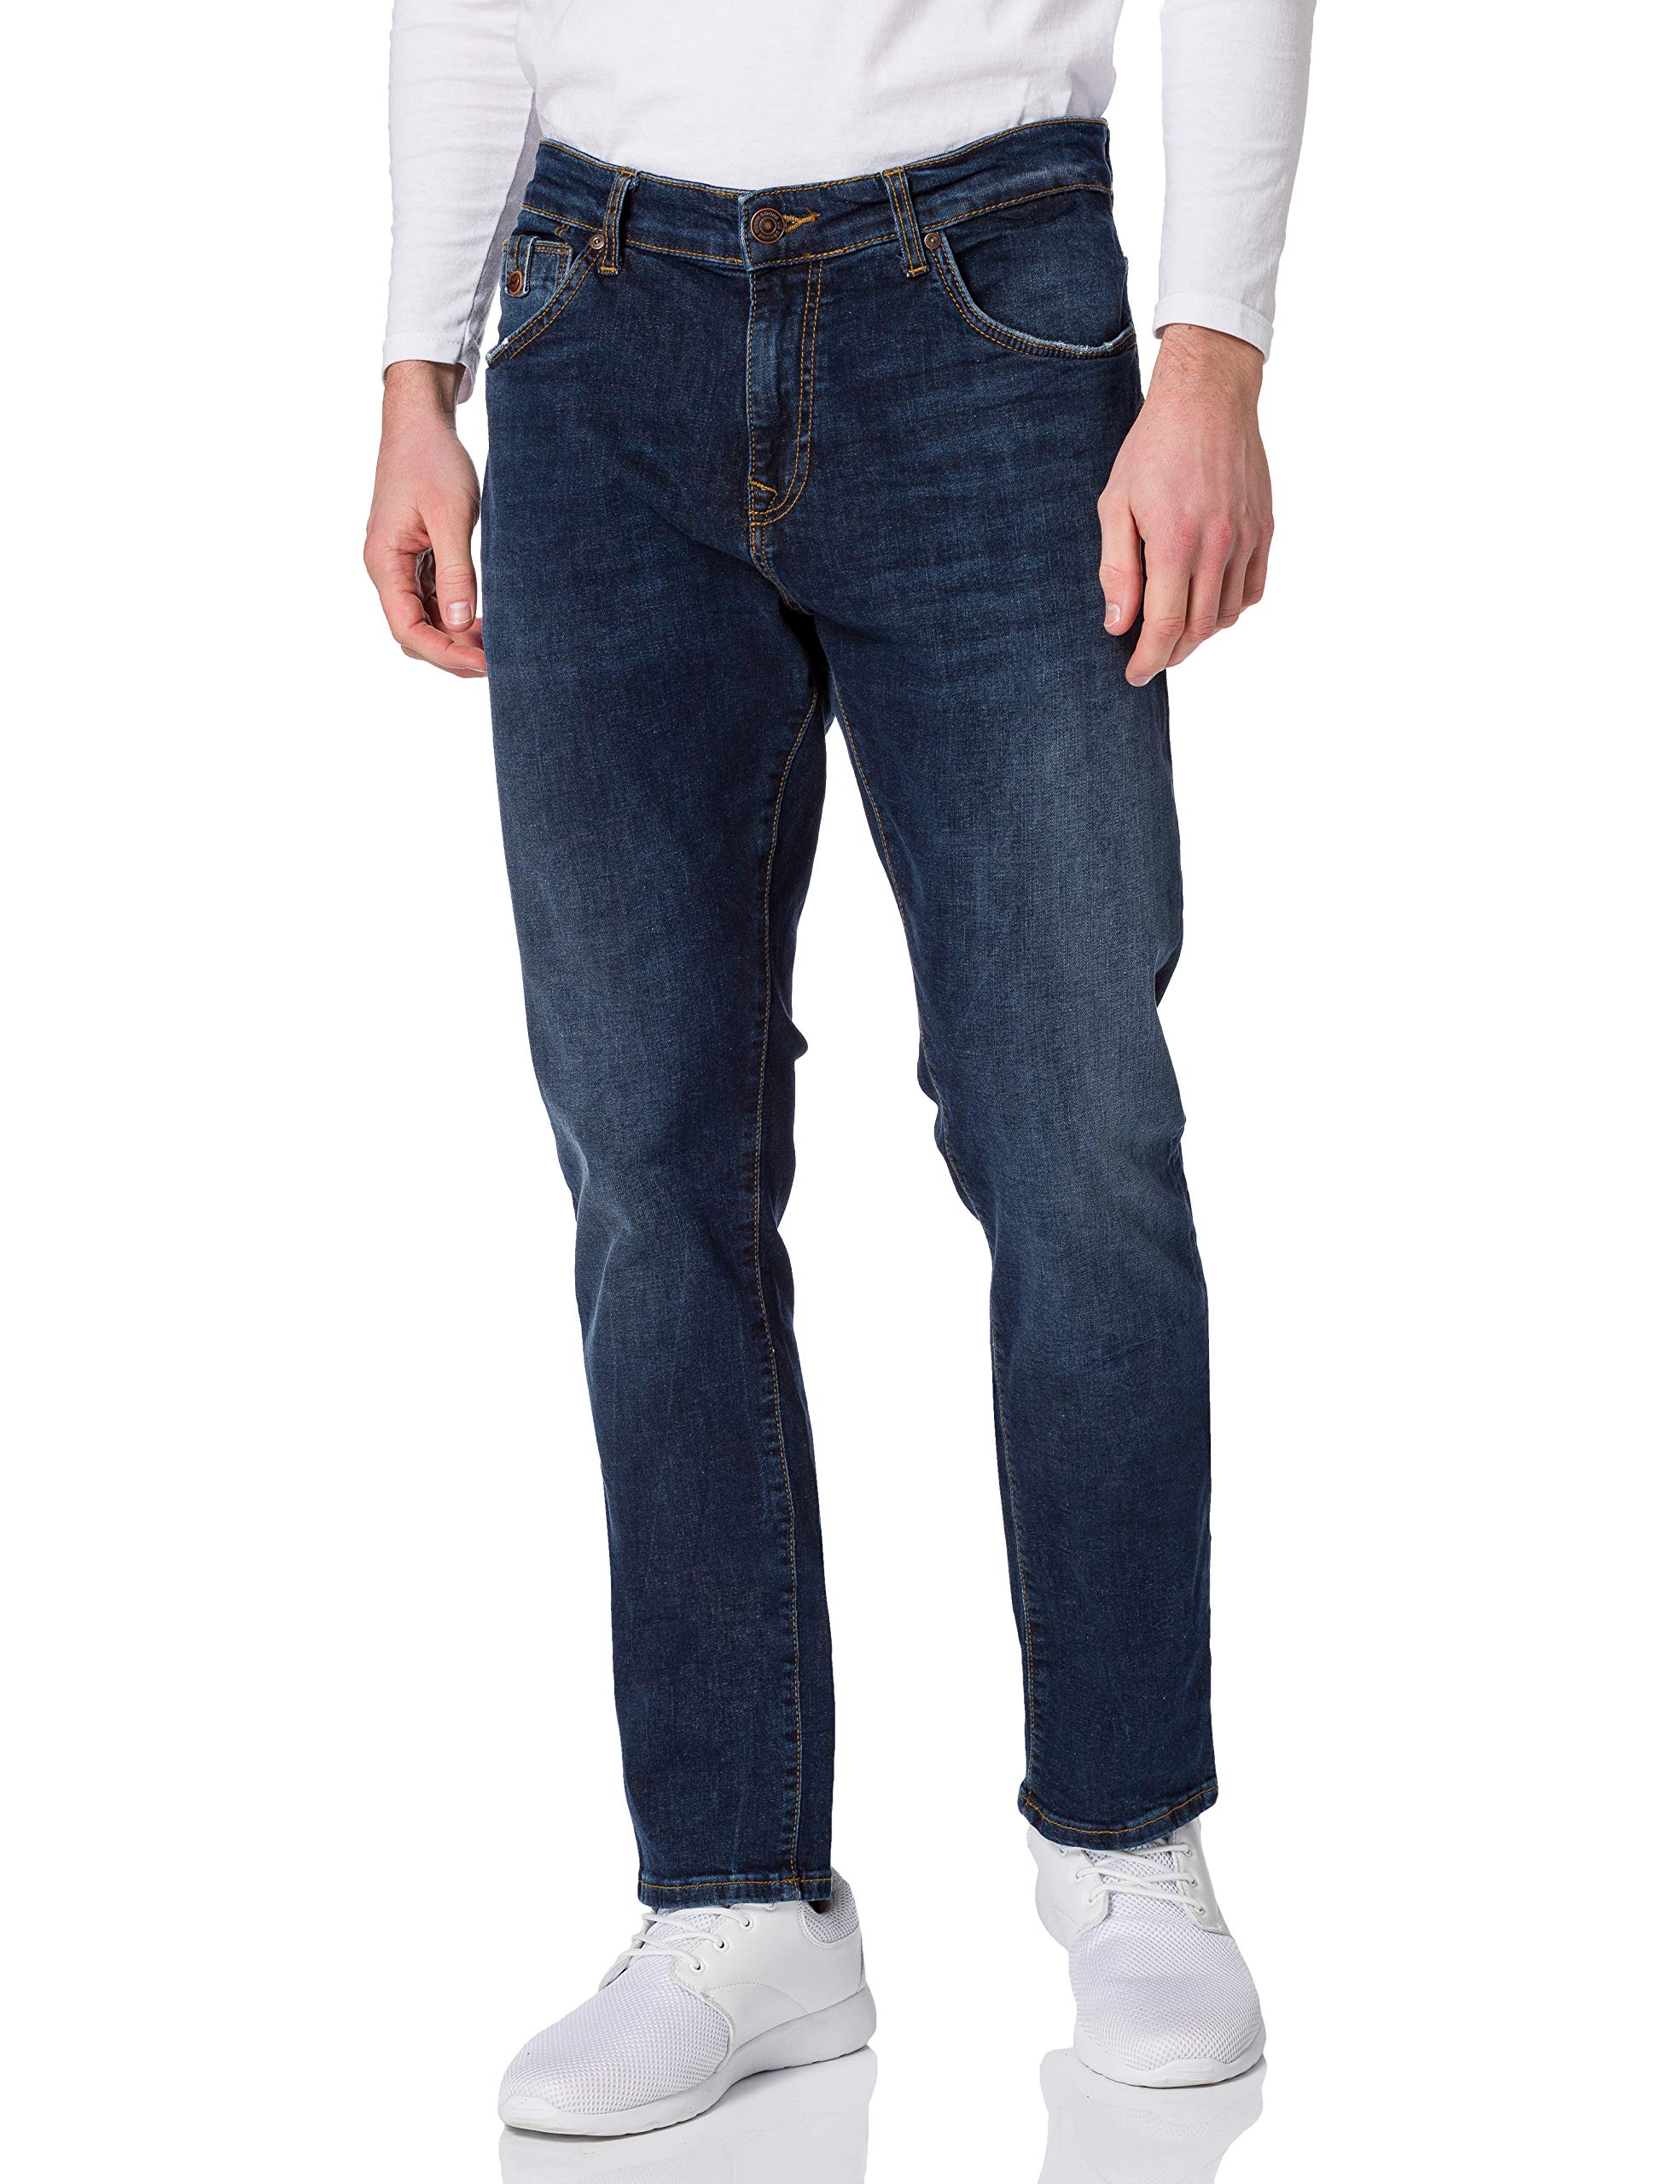 LTB Jeans Herren Joshua Jeans, Blau (Hercules Wash 52870), 36W / 34L